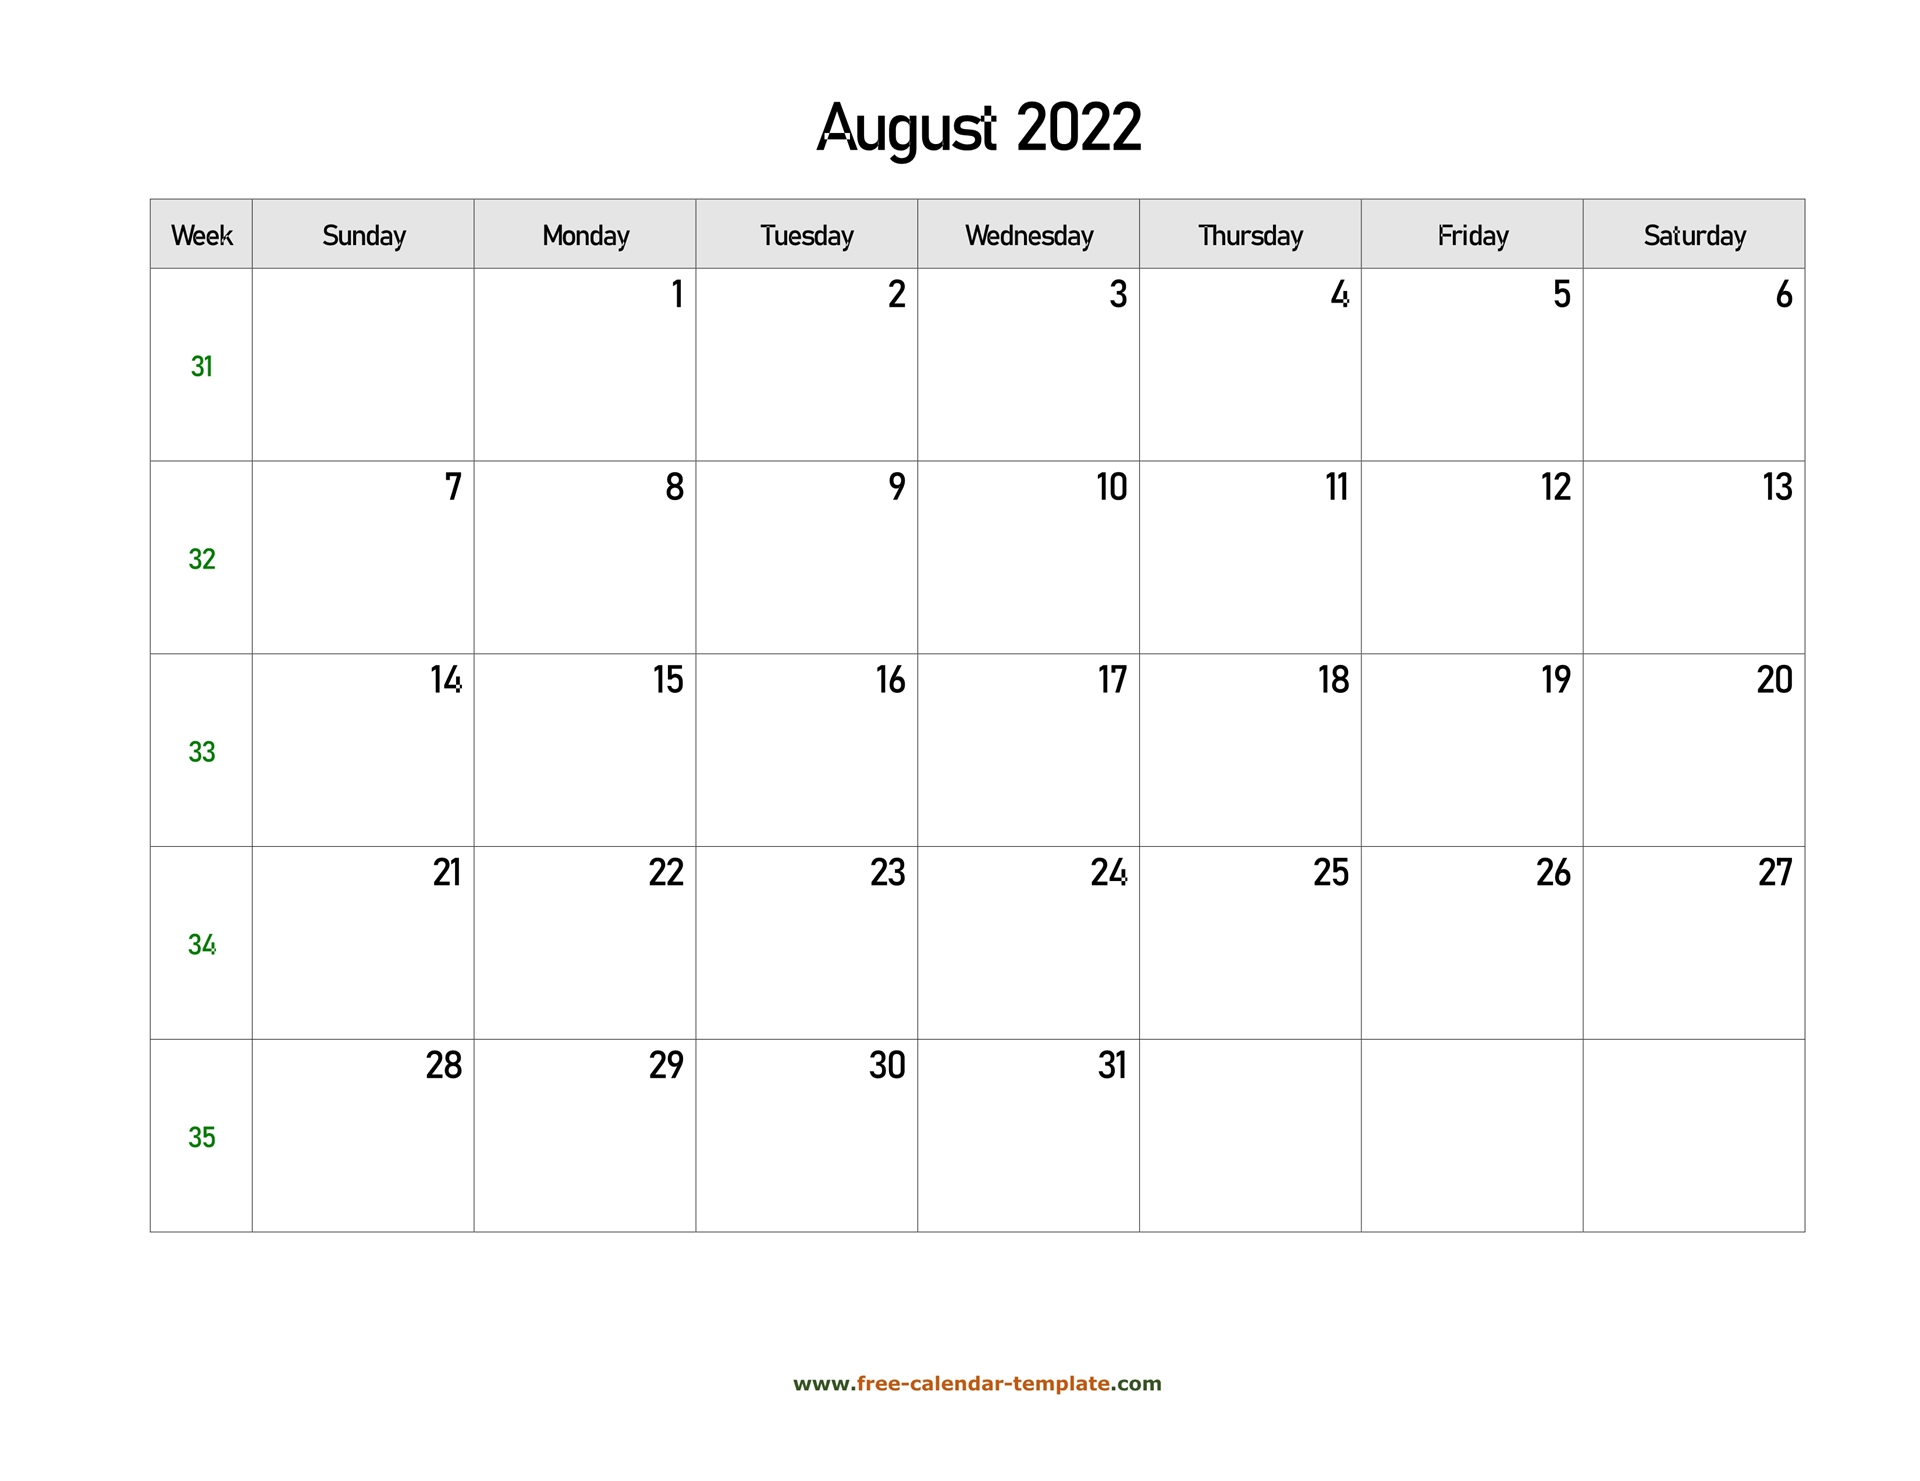 Pick Free Calendar August 2022